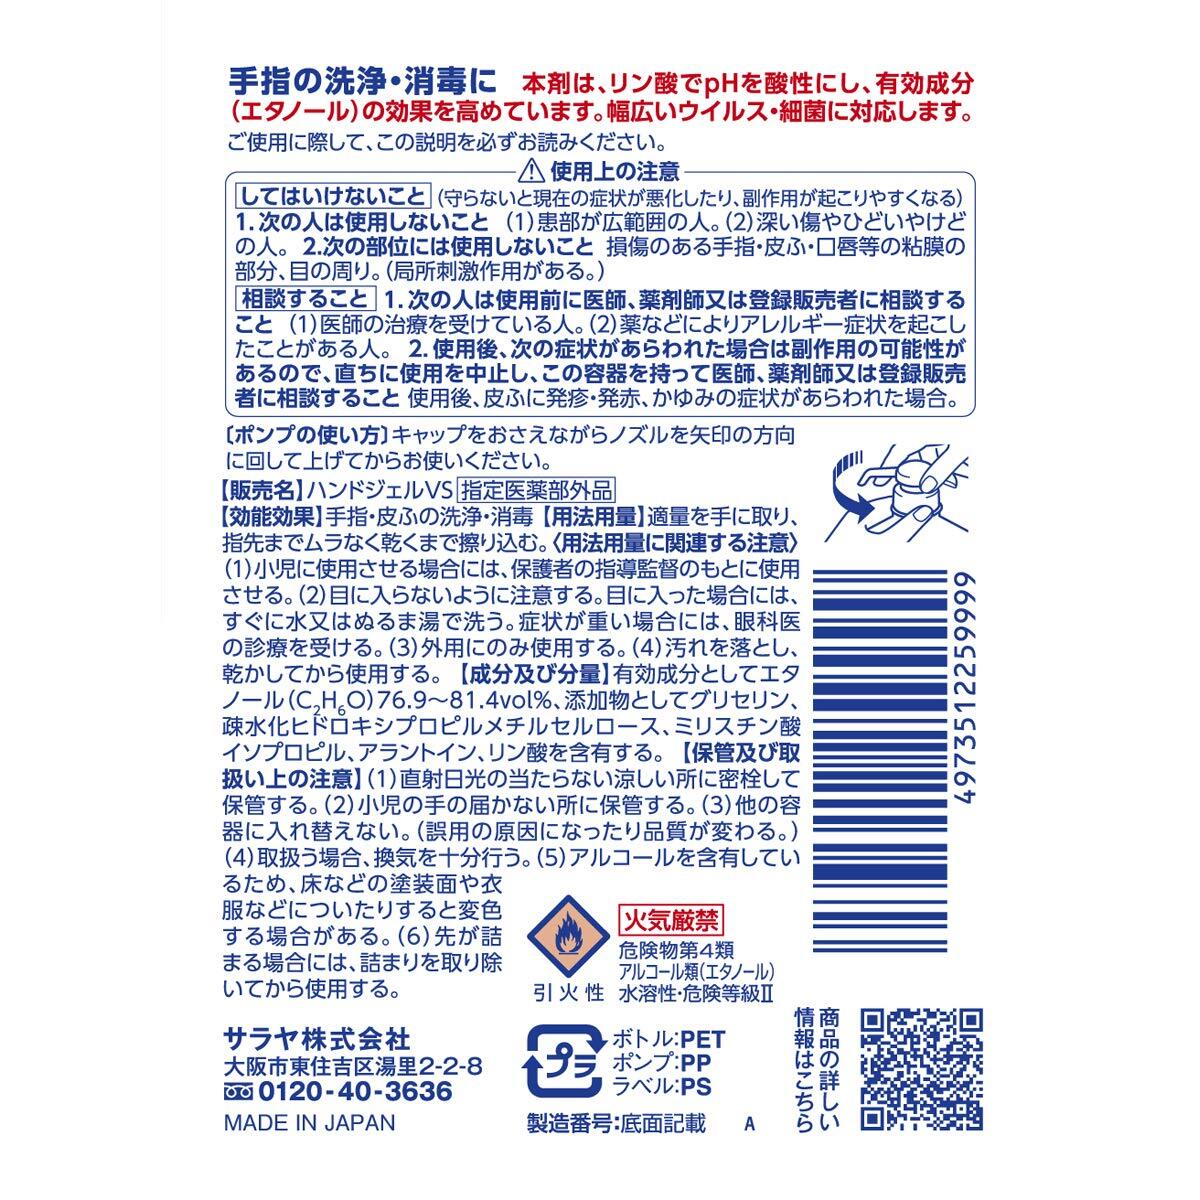  Sara ya hand labo hand finger disinfection hand gel VS 300ml [ designation quasi drug ] made in Japan 